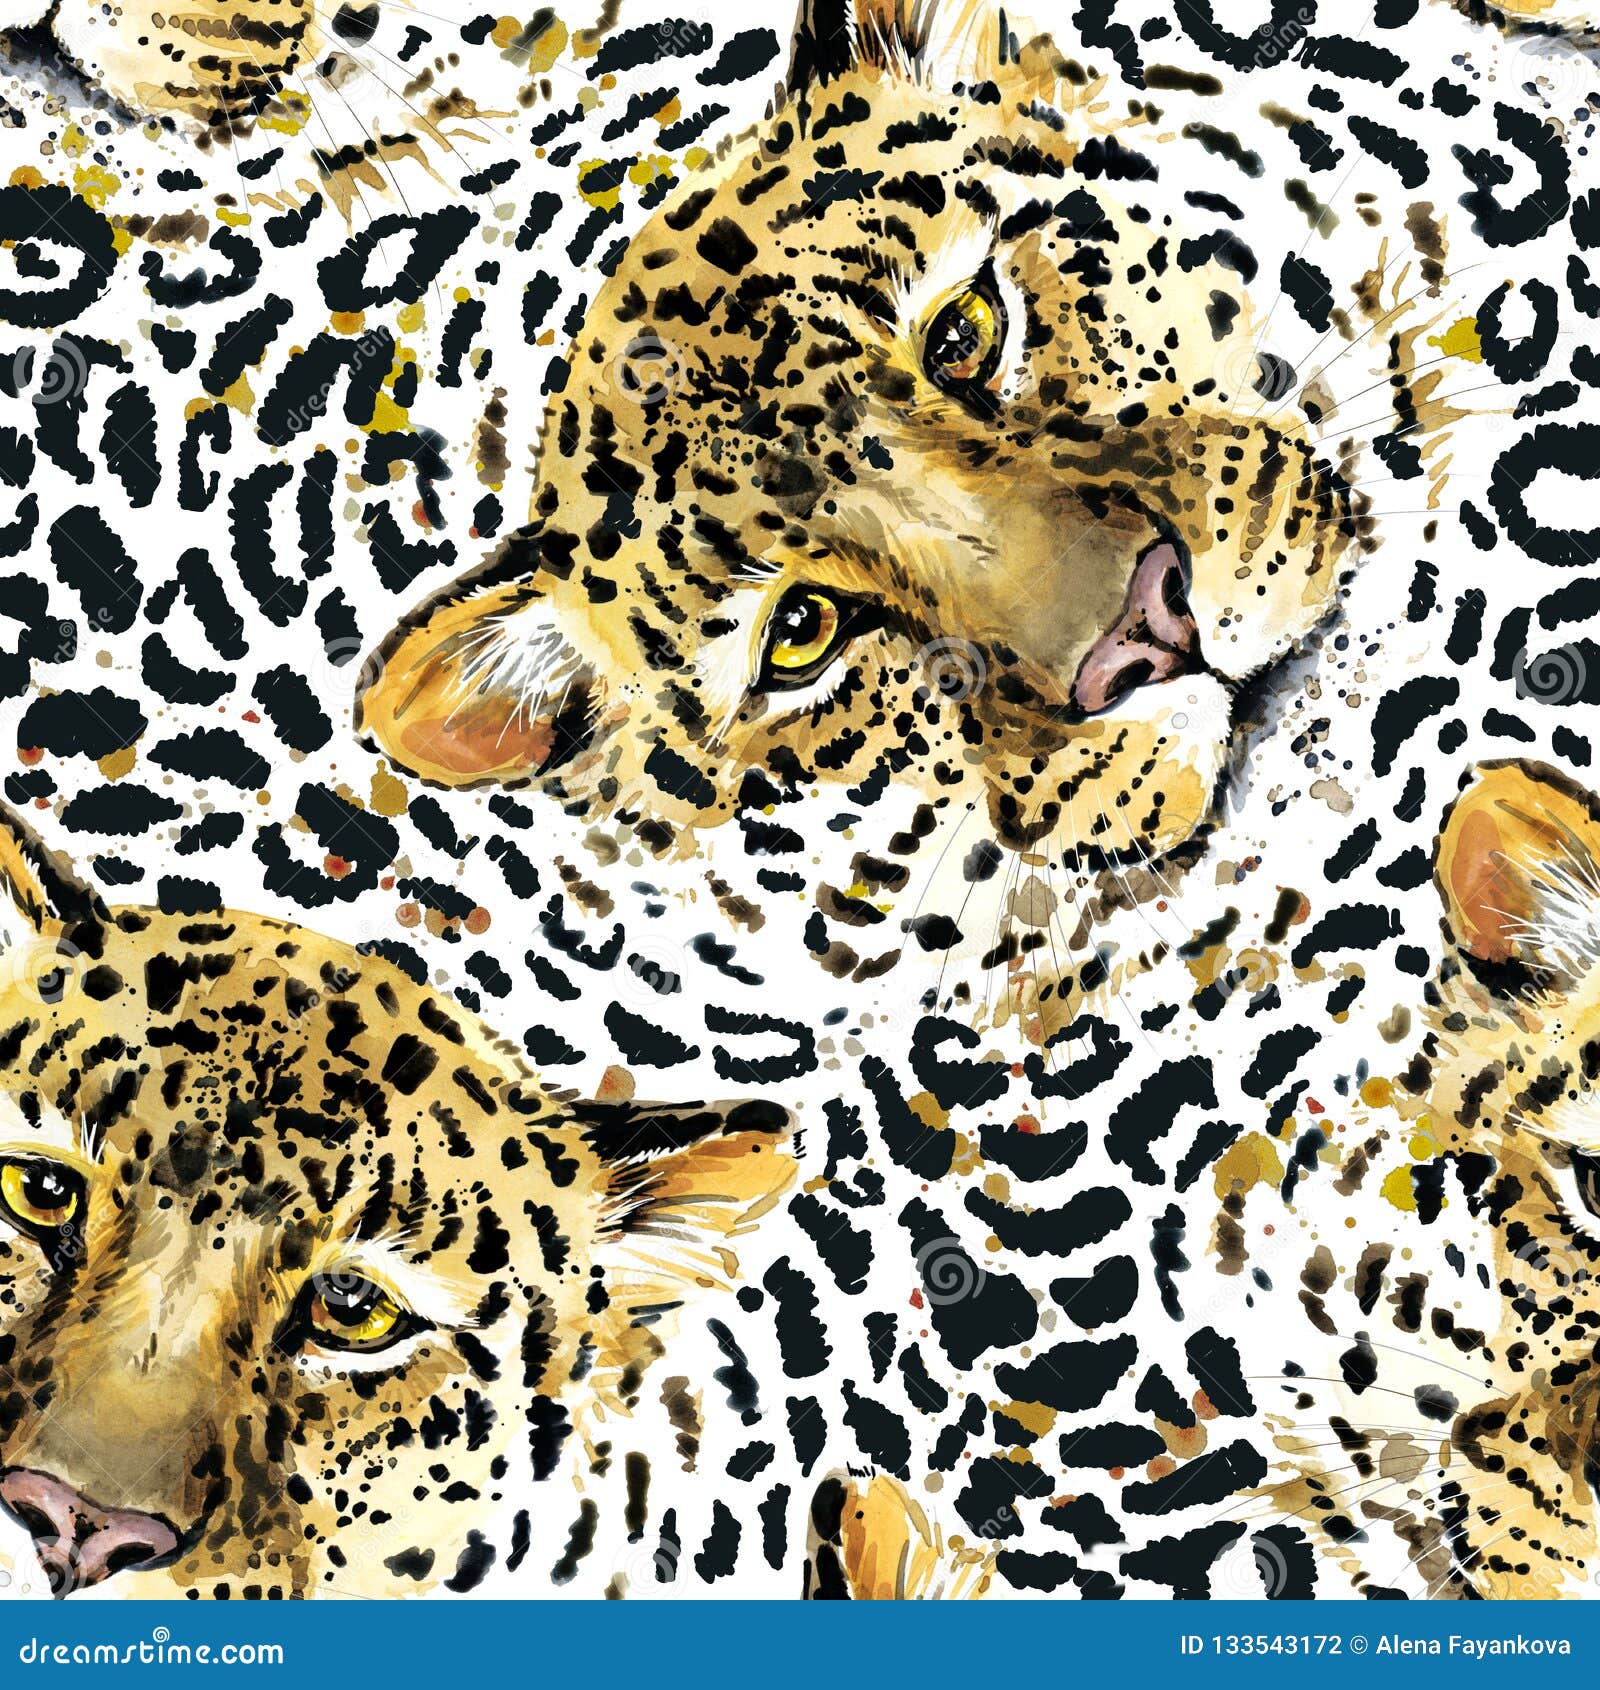 Leopard Pattern Watercolor Jaguar Illustration. Wild Animal Skin Seamless Background. Stock Illustration Illustration of leopard, 133543172